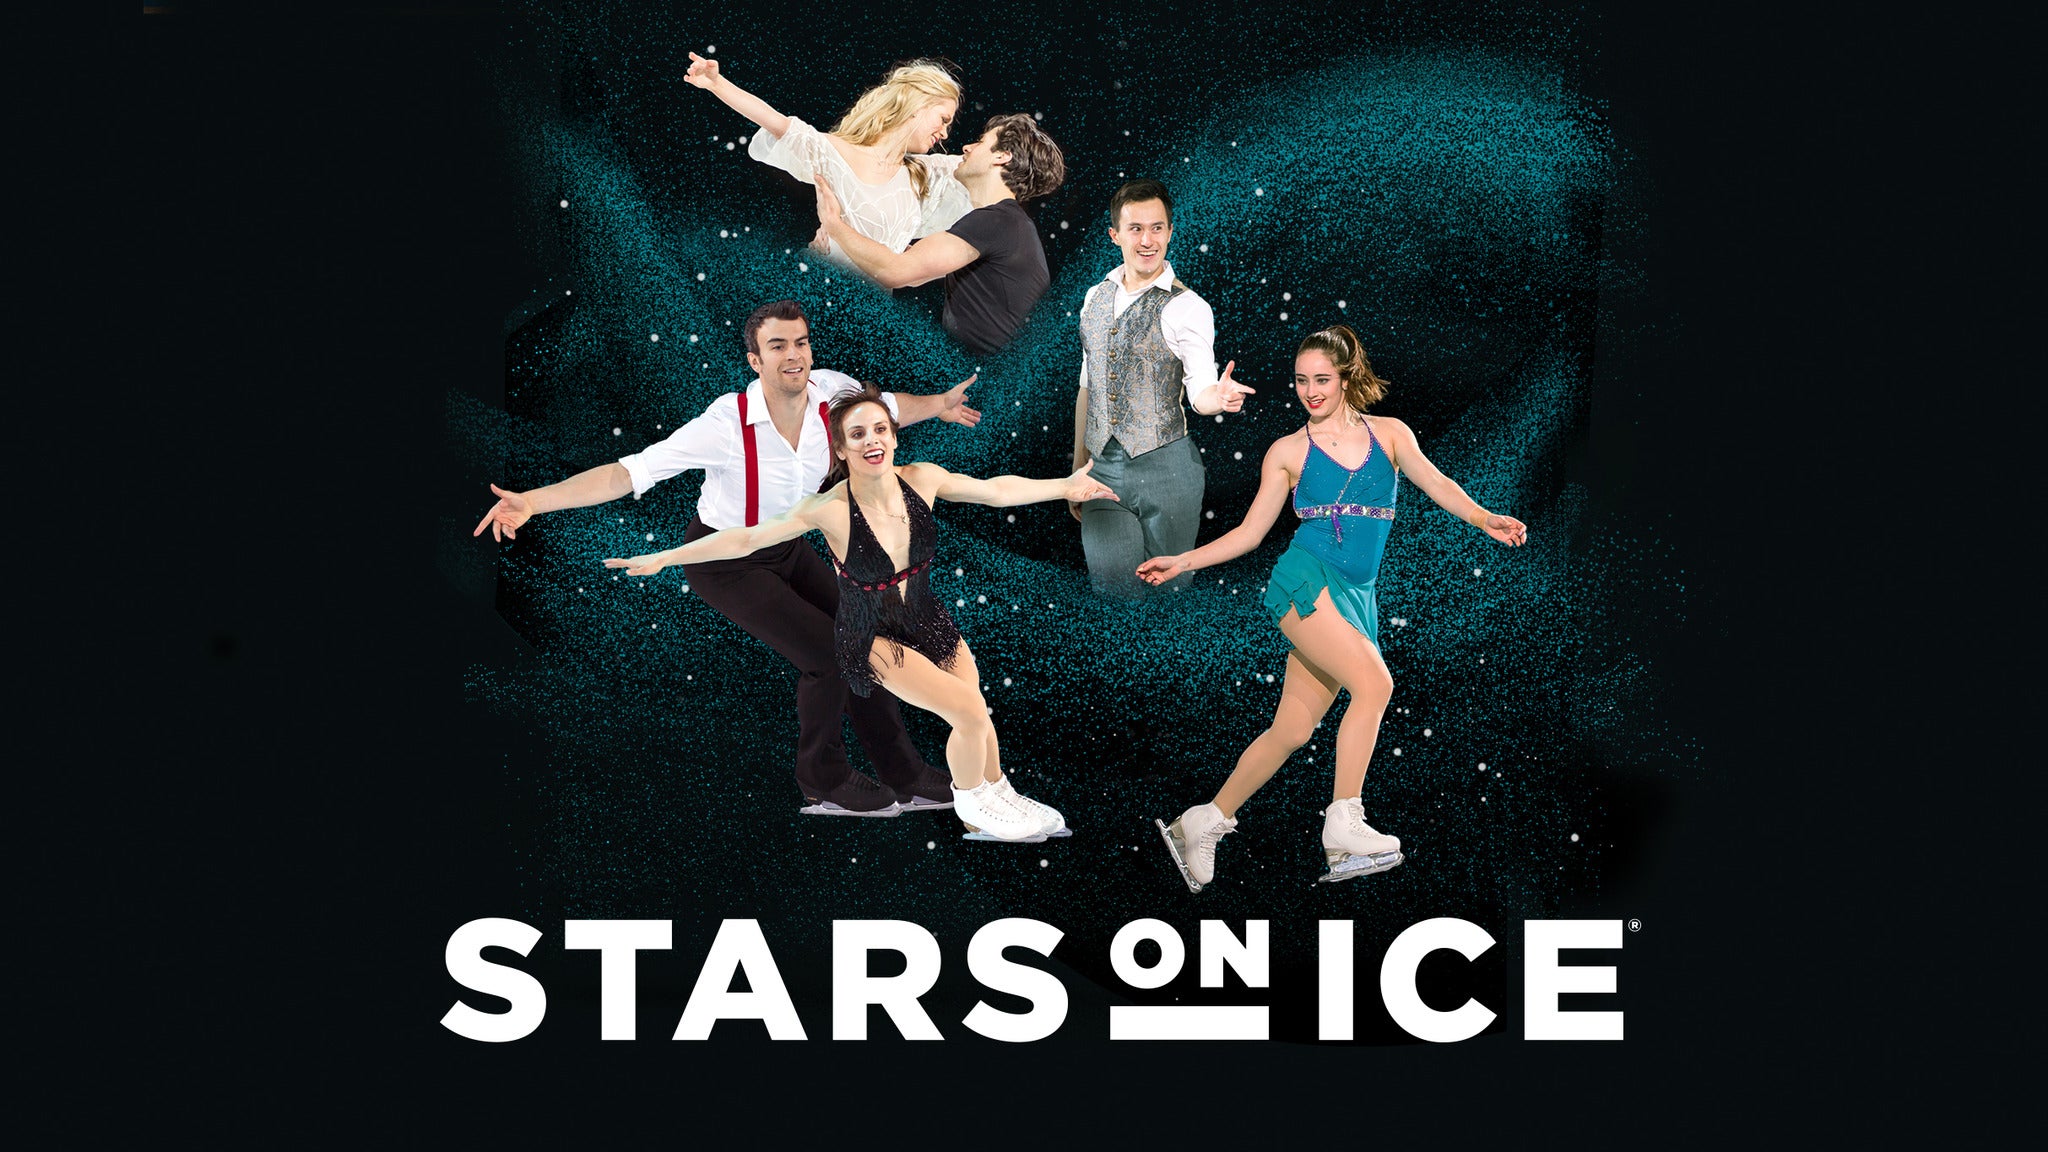 Stars on Ice - Canada in Hamilton promo photo for Presales presale offer code